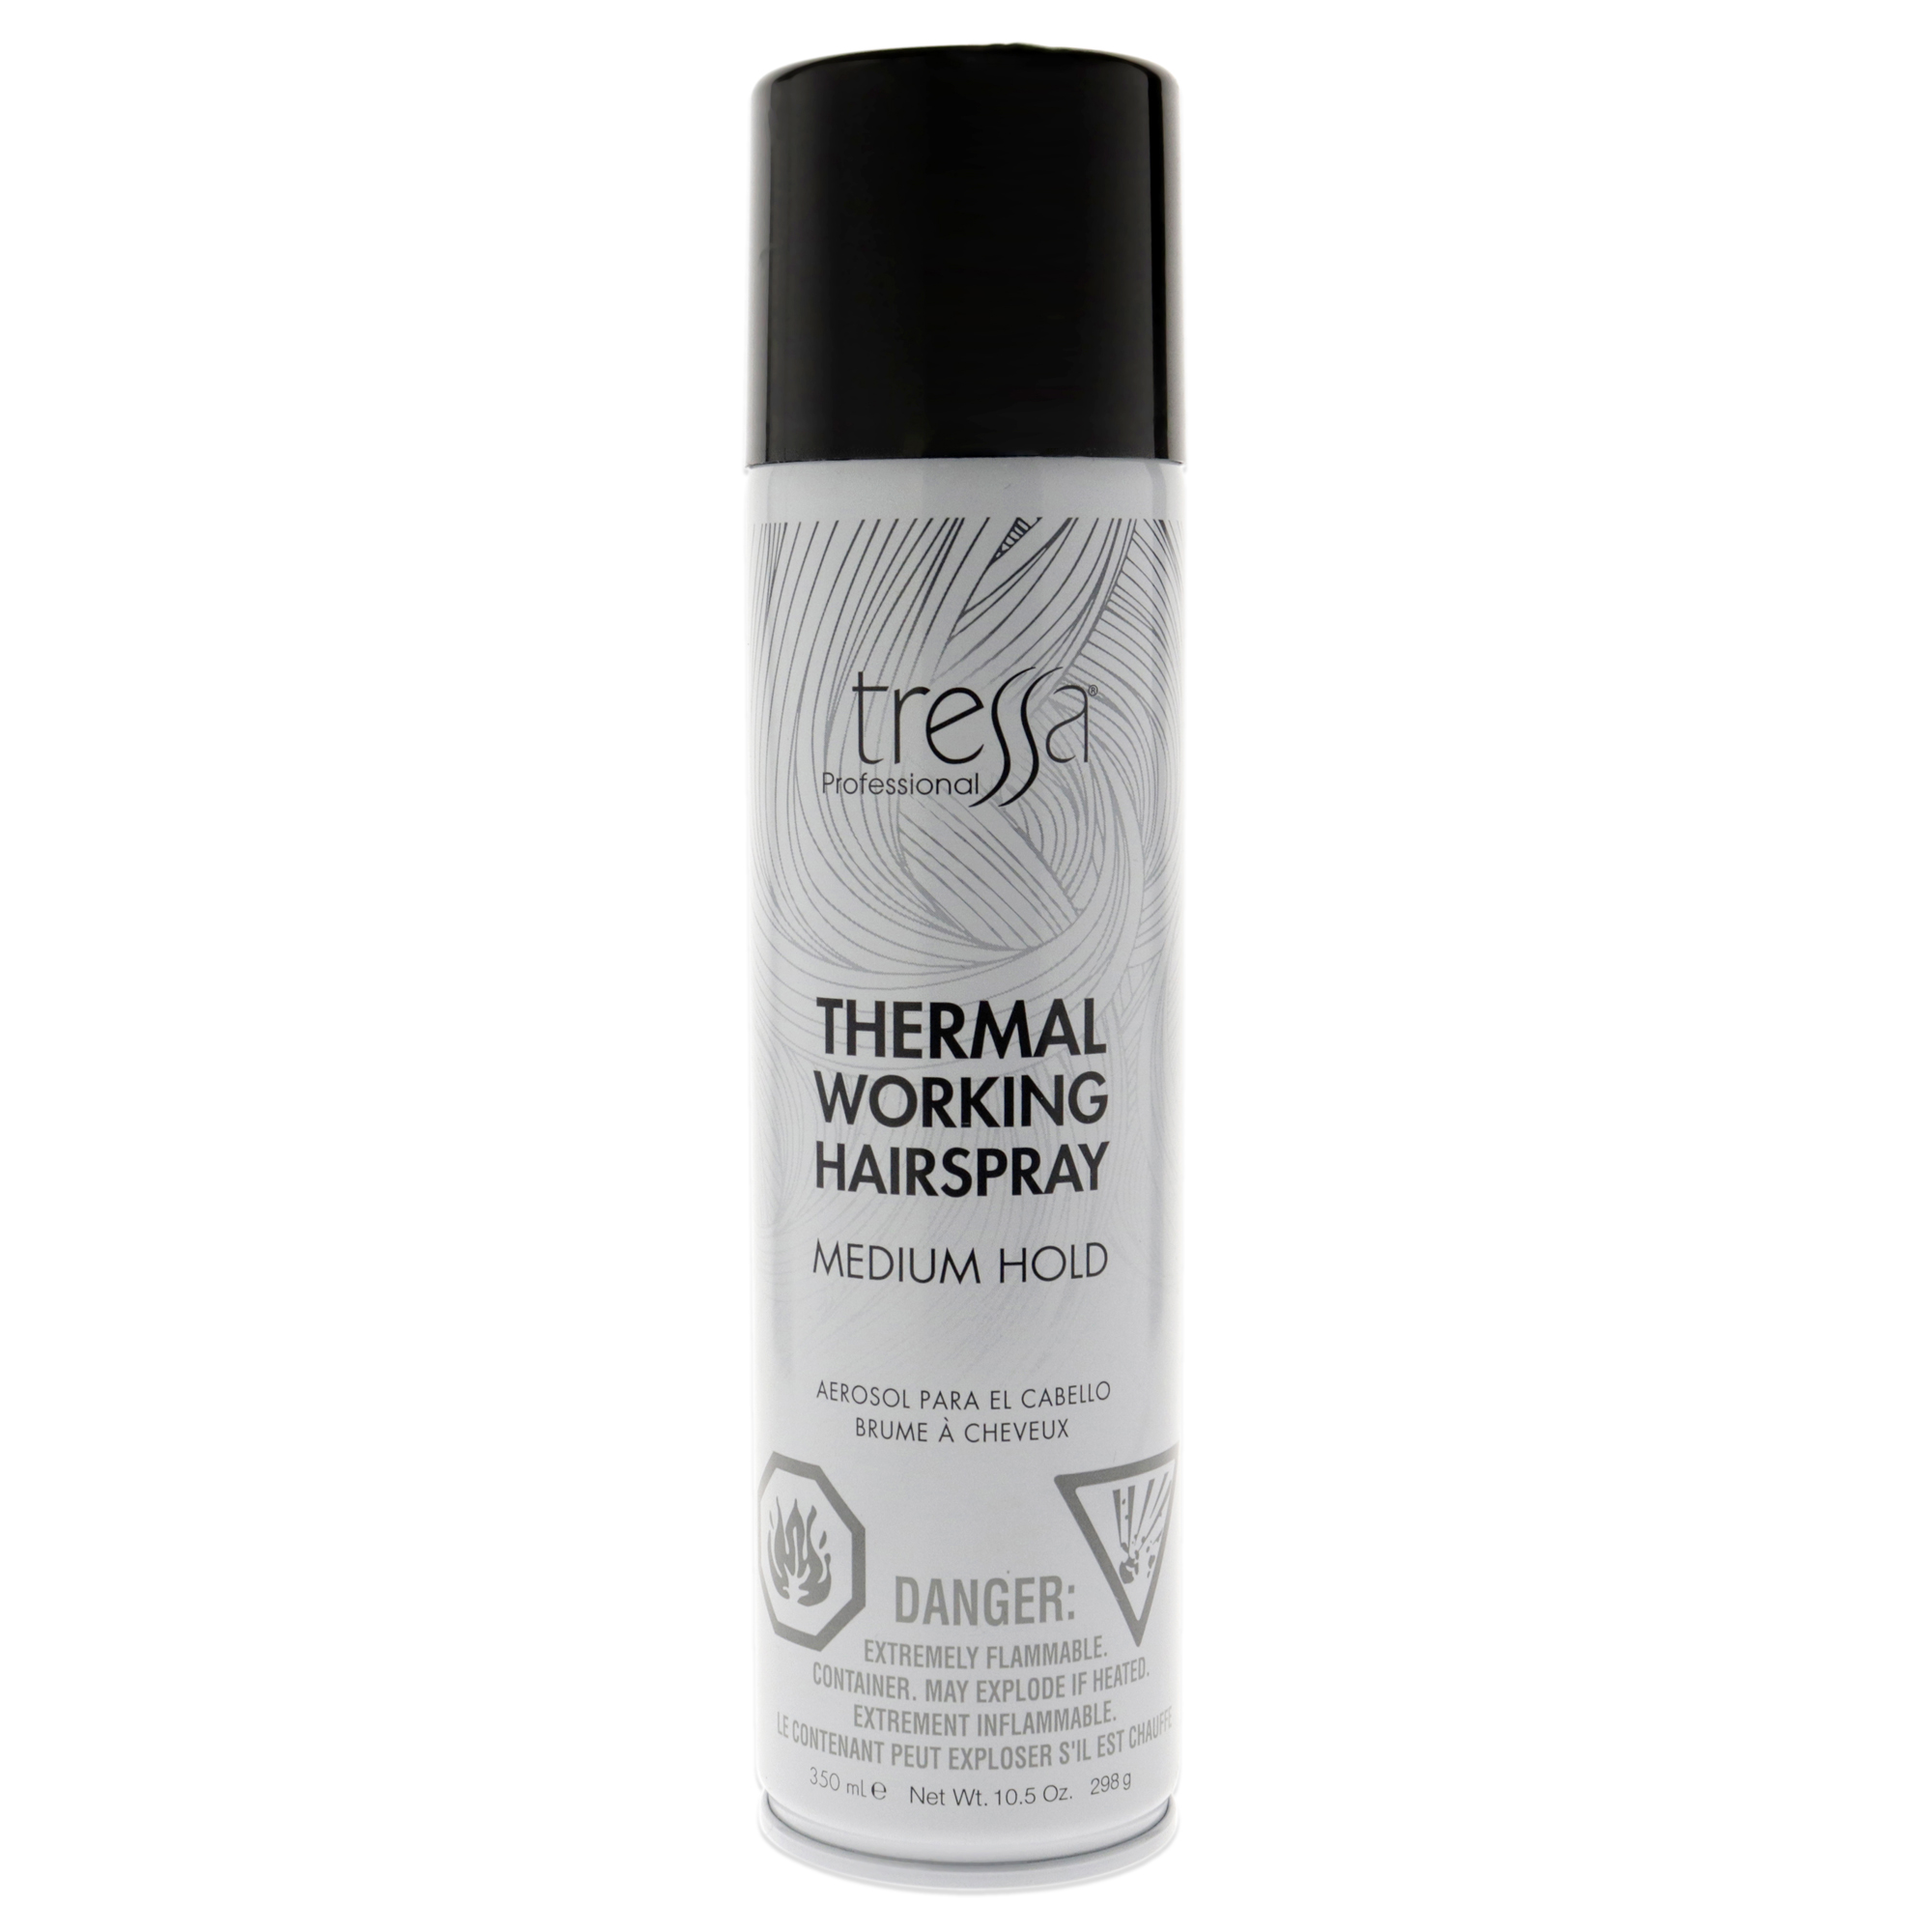 Tressa Thermal Working Hairspray by Tressa for Unisex - 10.5 oz Hair Spray